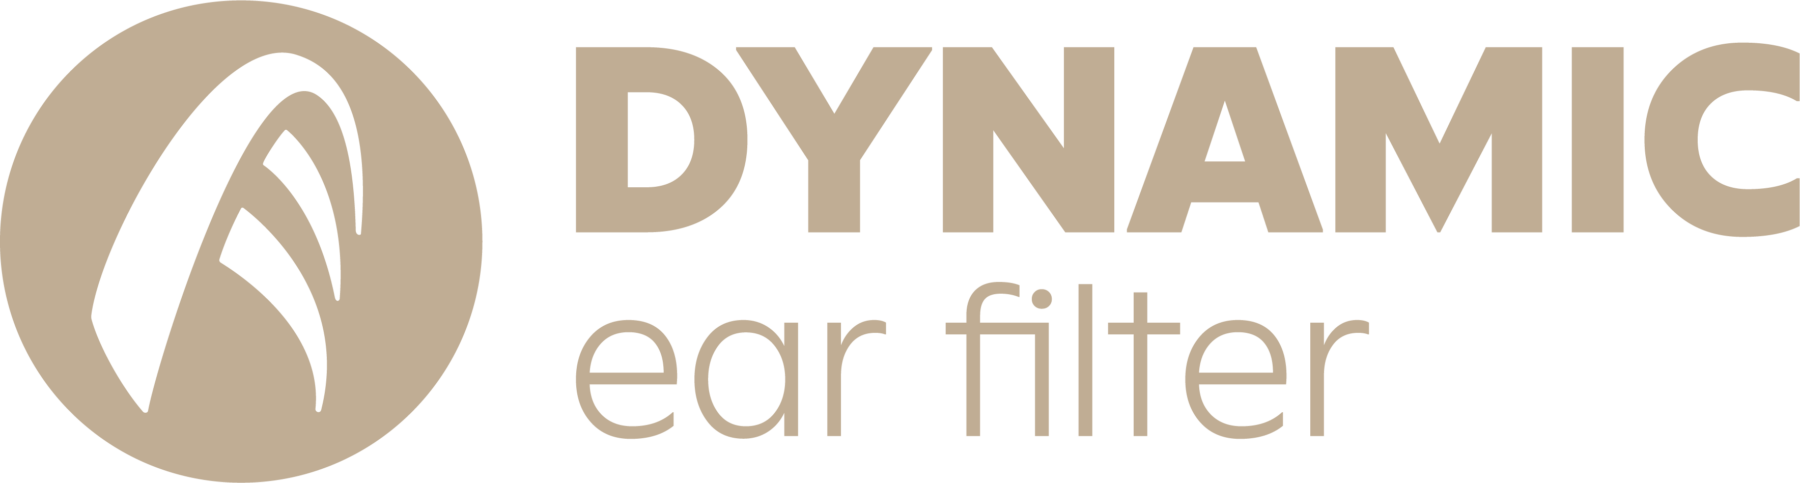 Dynamic Ear Company